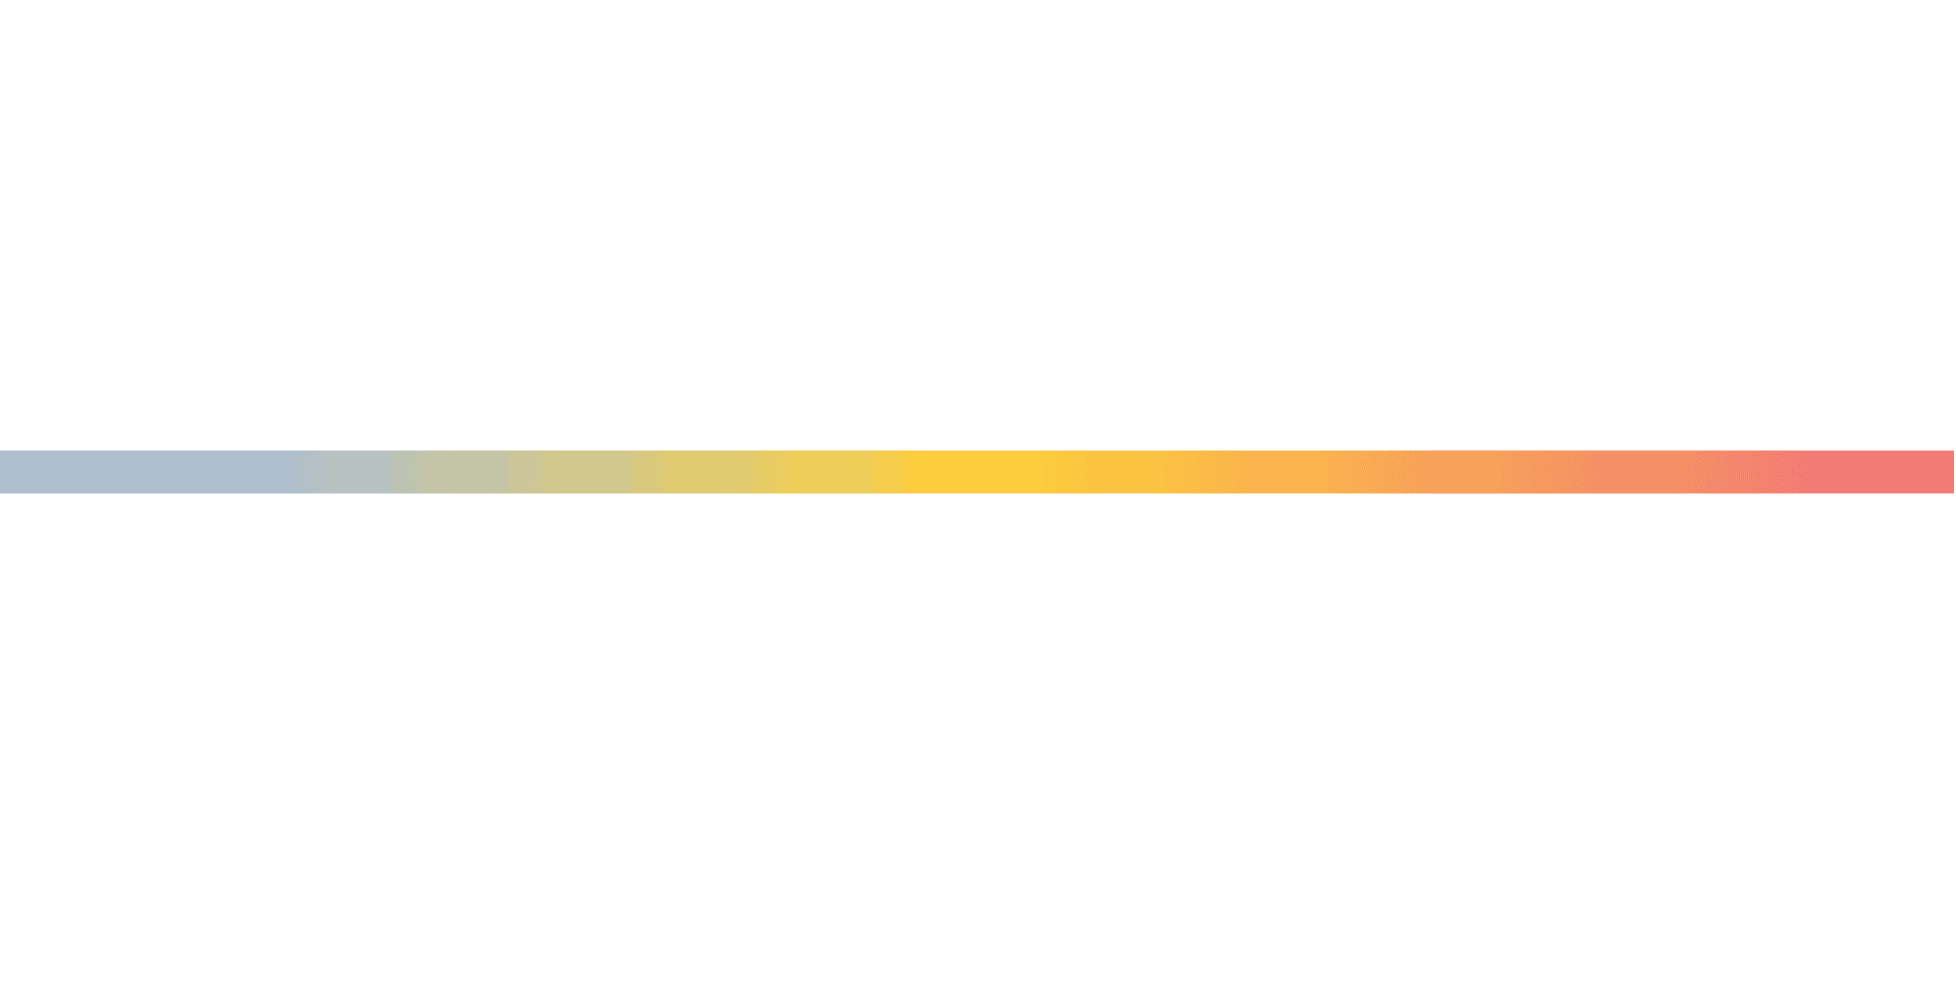 Corcoran CA Christie Bahamas logo